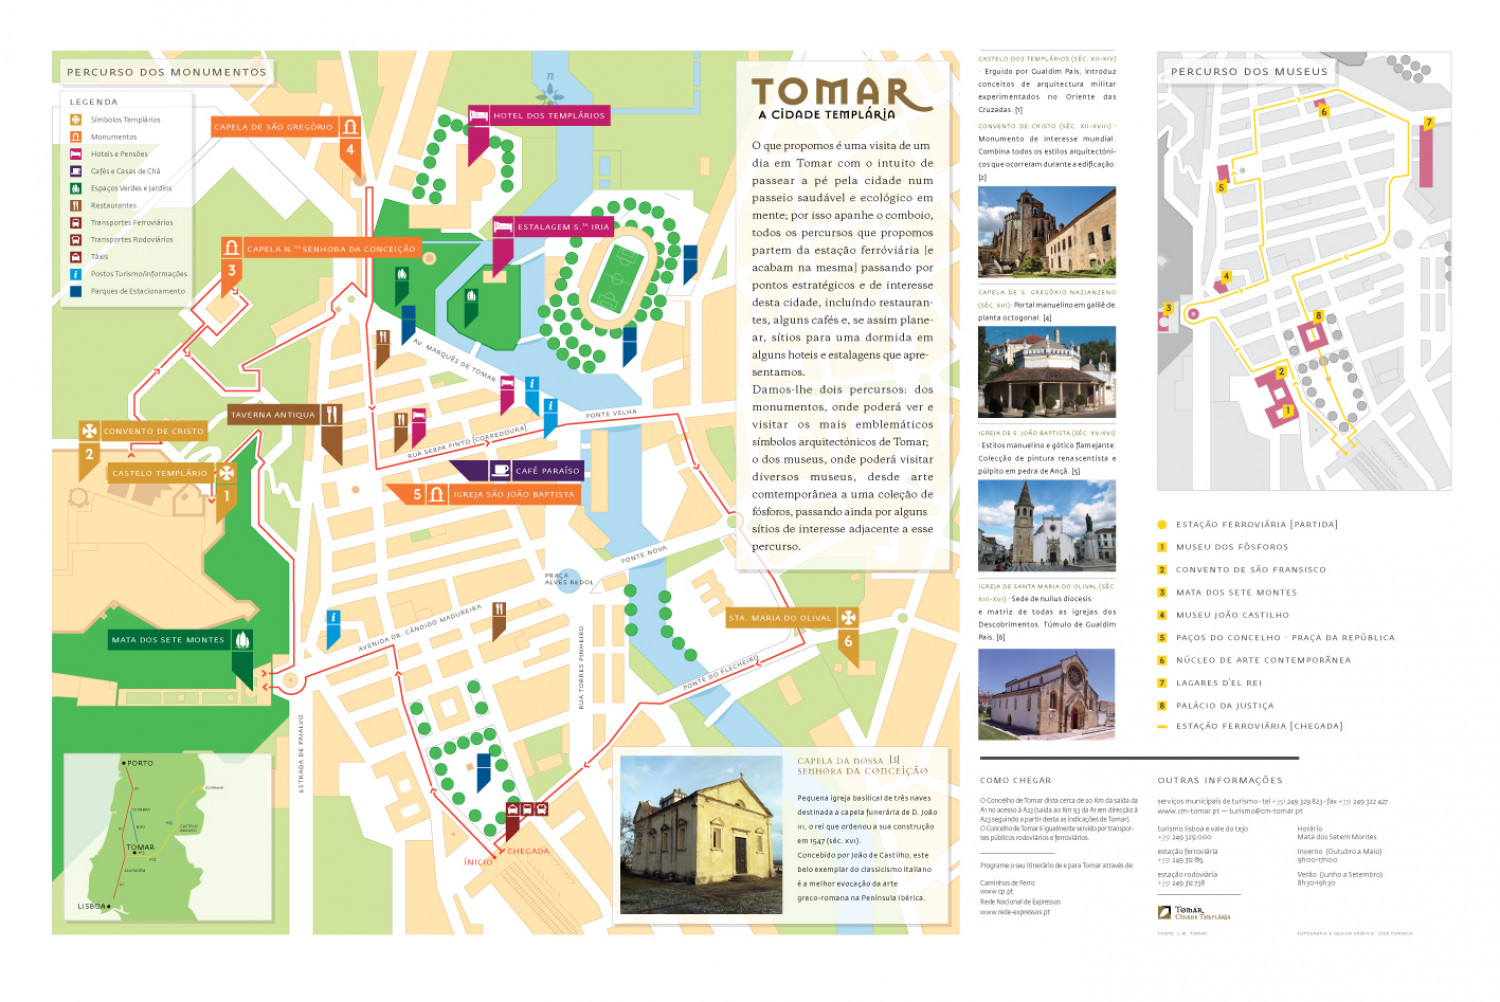 Tomar - The Templar City Infographic